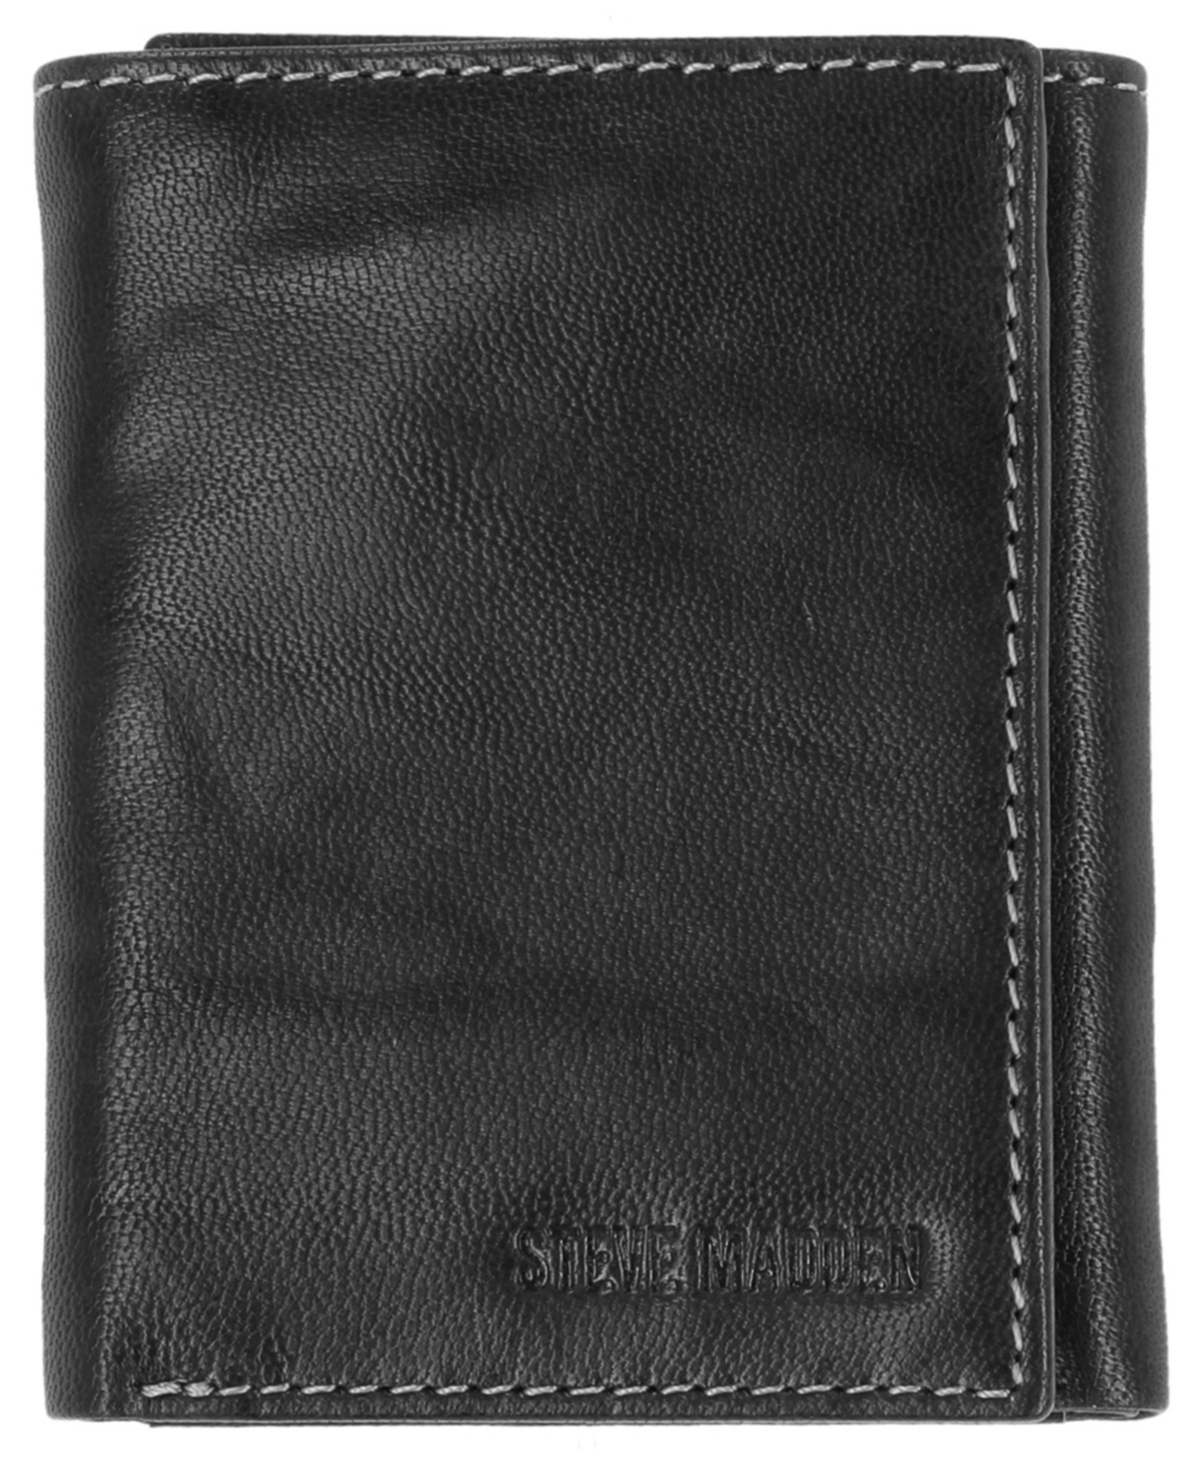 Men's Antique-like Trifold Wallet - Black